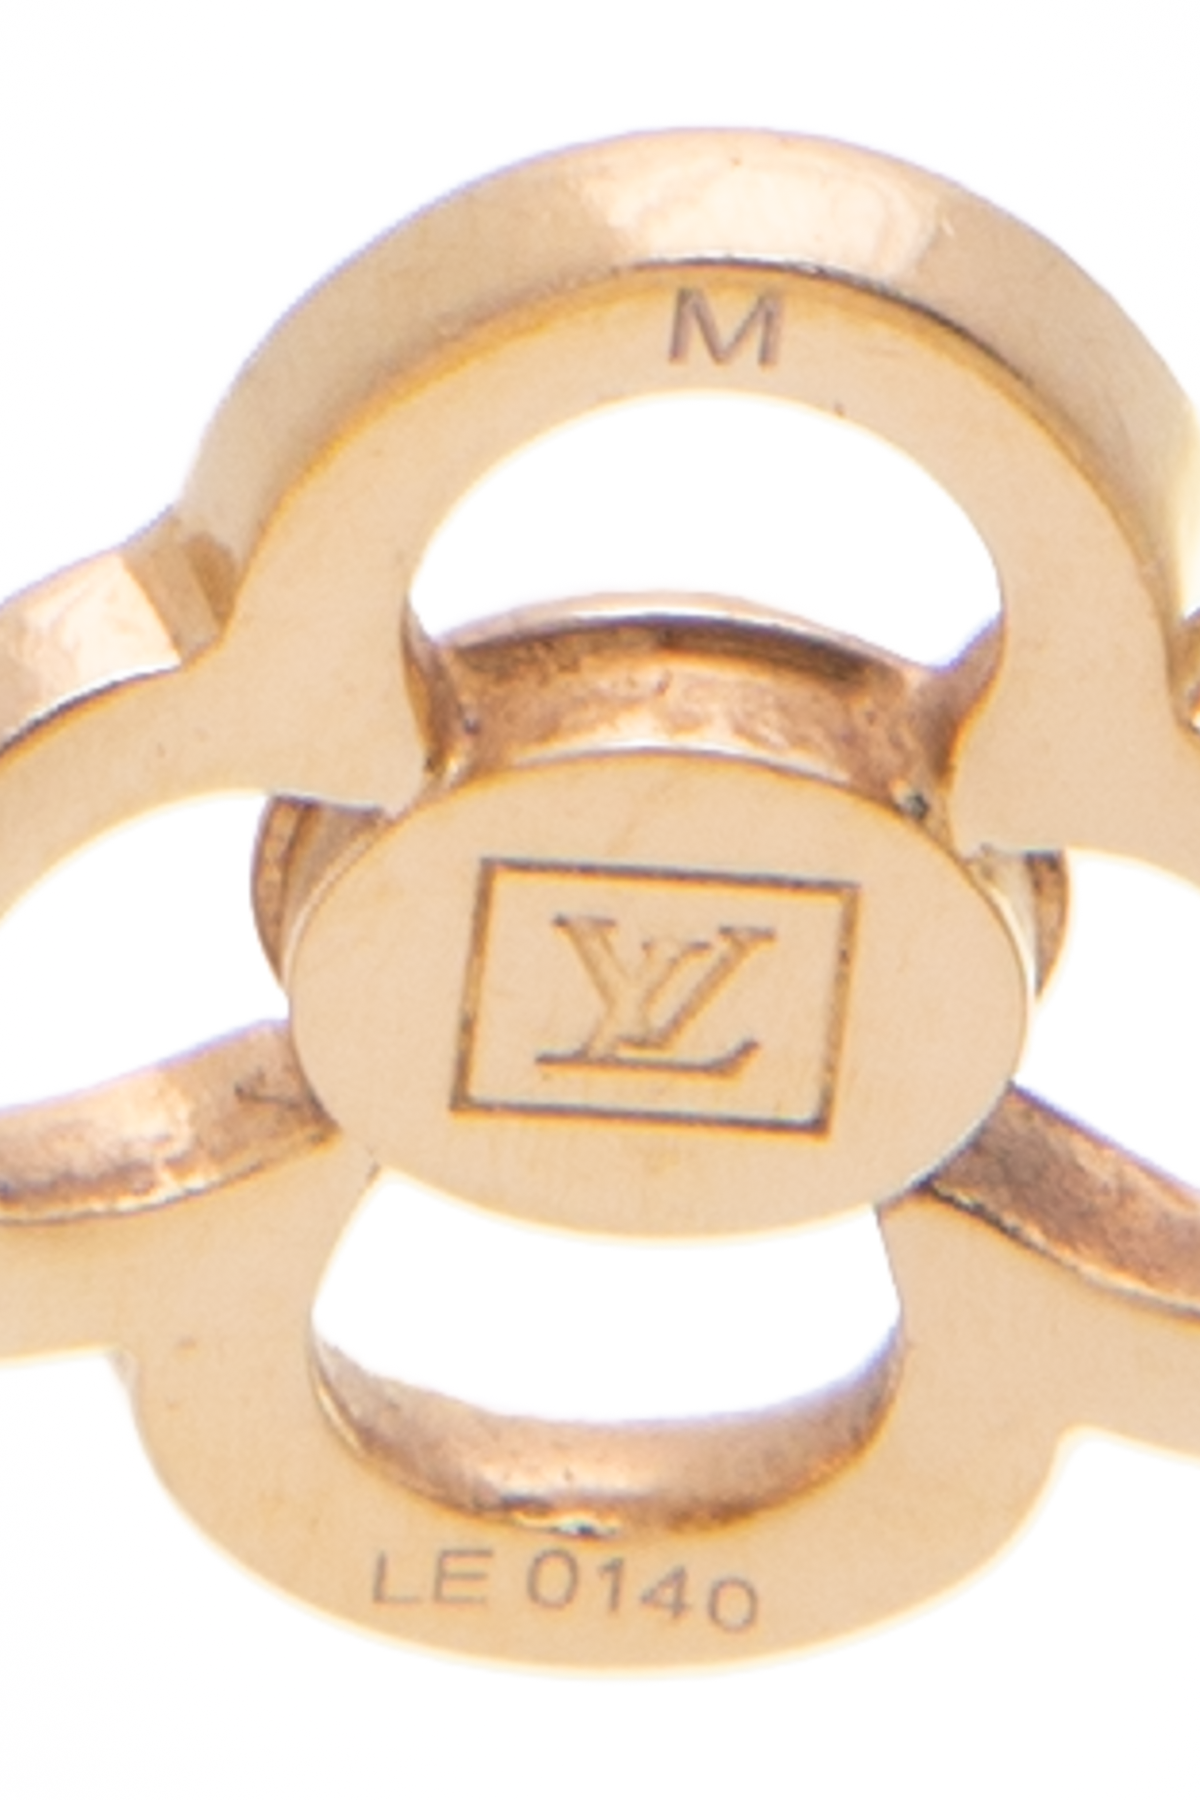 Louis Vuitton Crystal Flower Power Brass Ring Size M Louis Vuitton